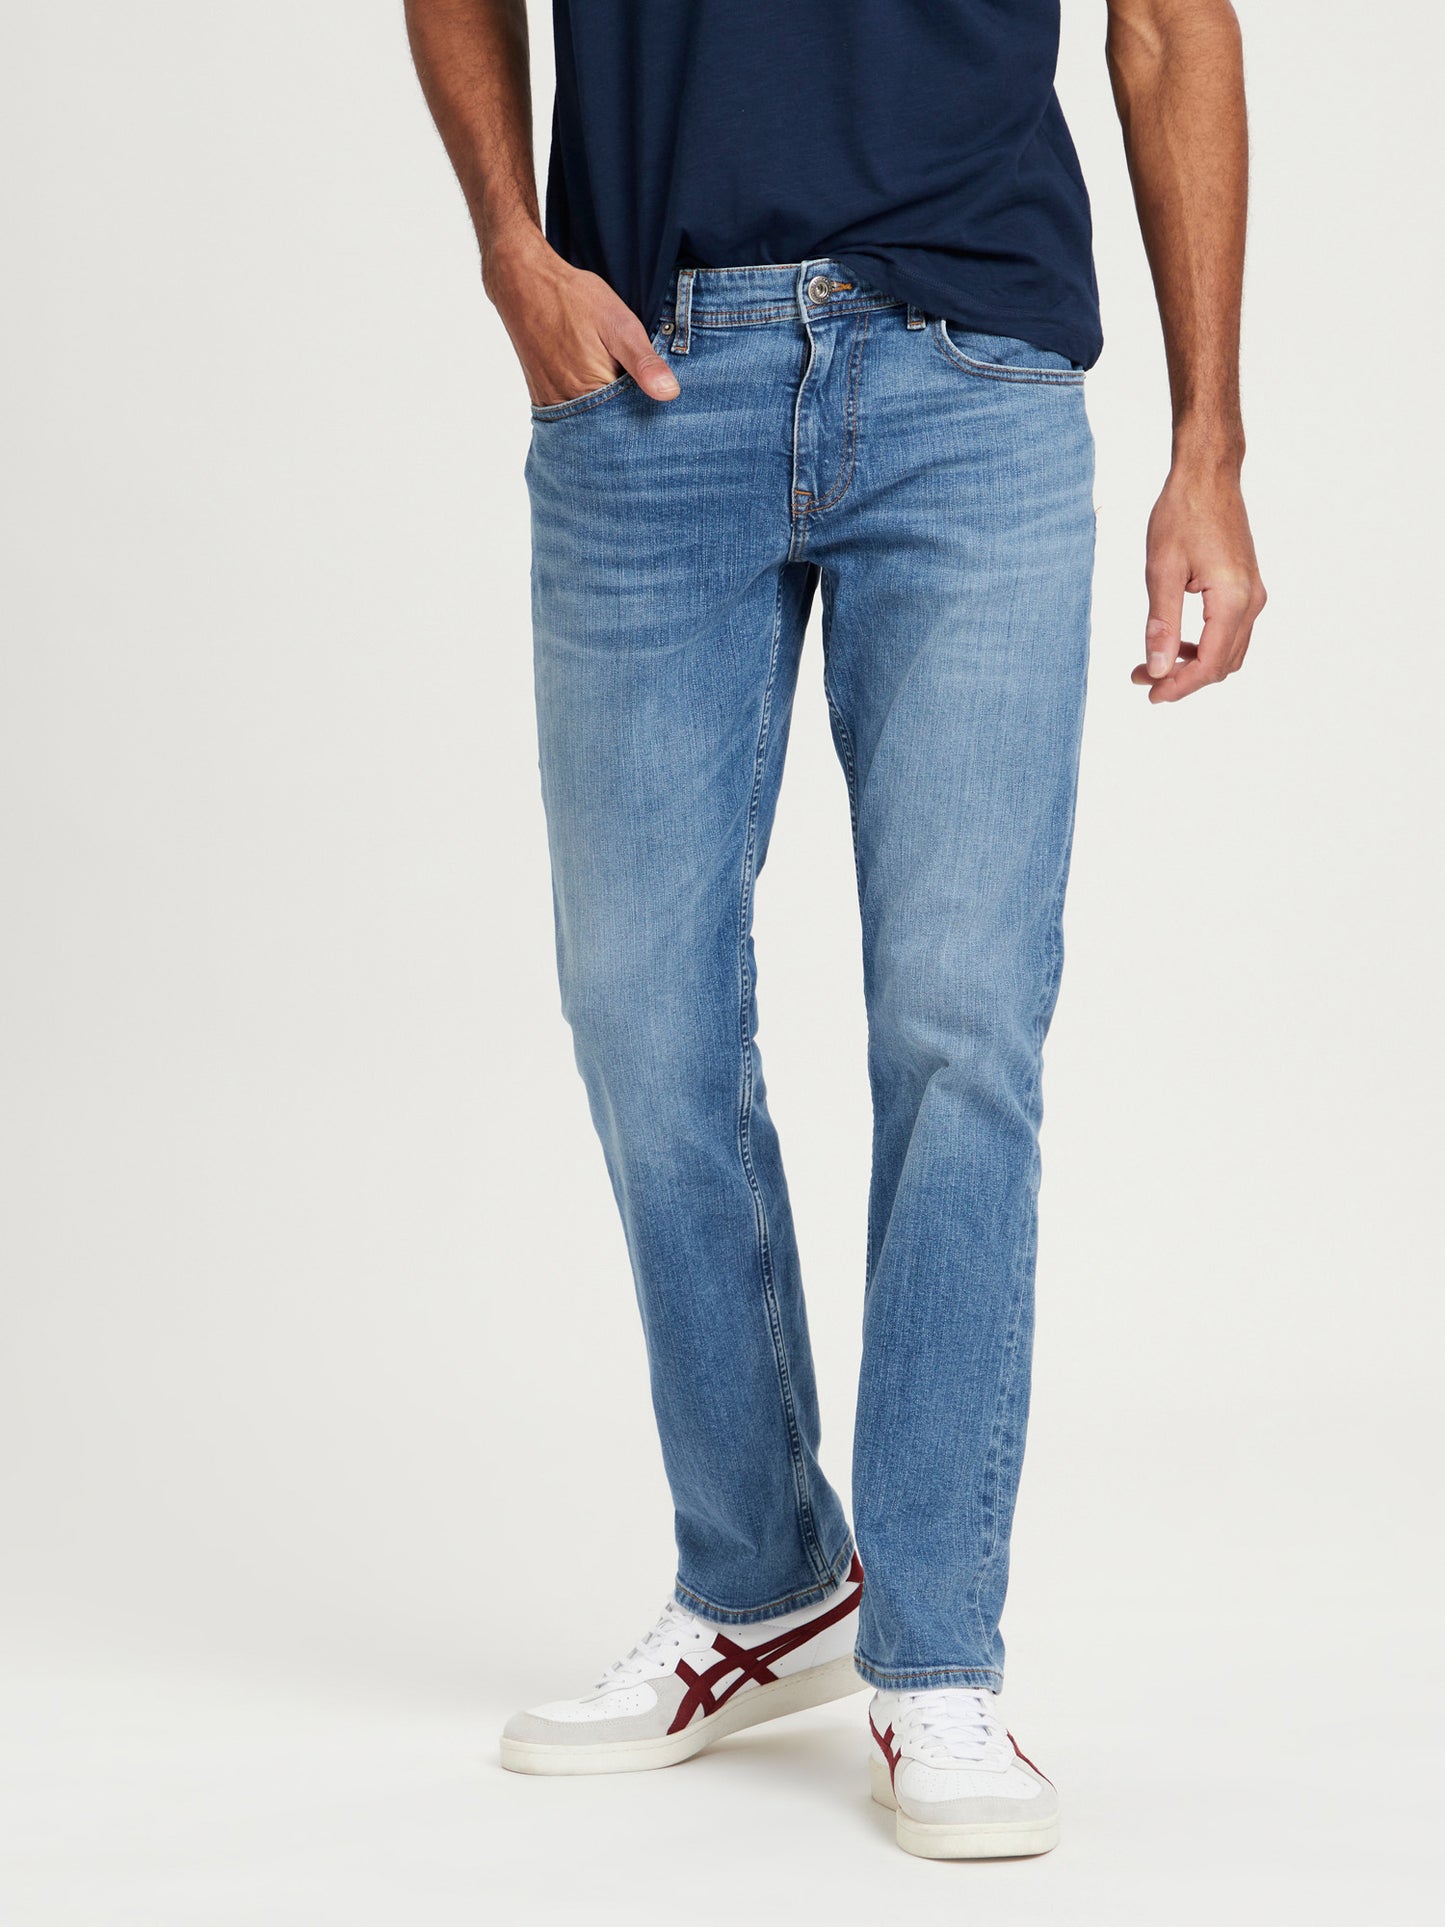 Dylan Herren Jeans Regular Fit Regular Waist Straight Leg hellblau